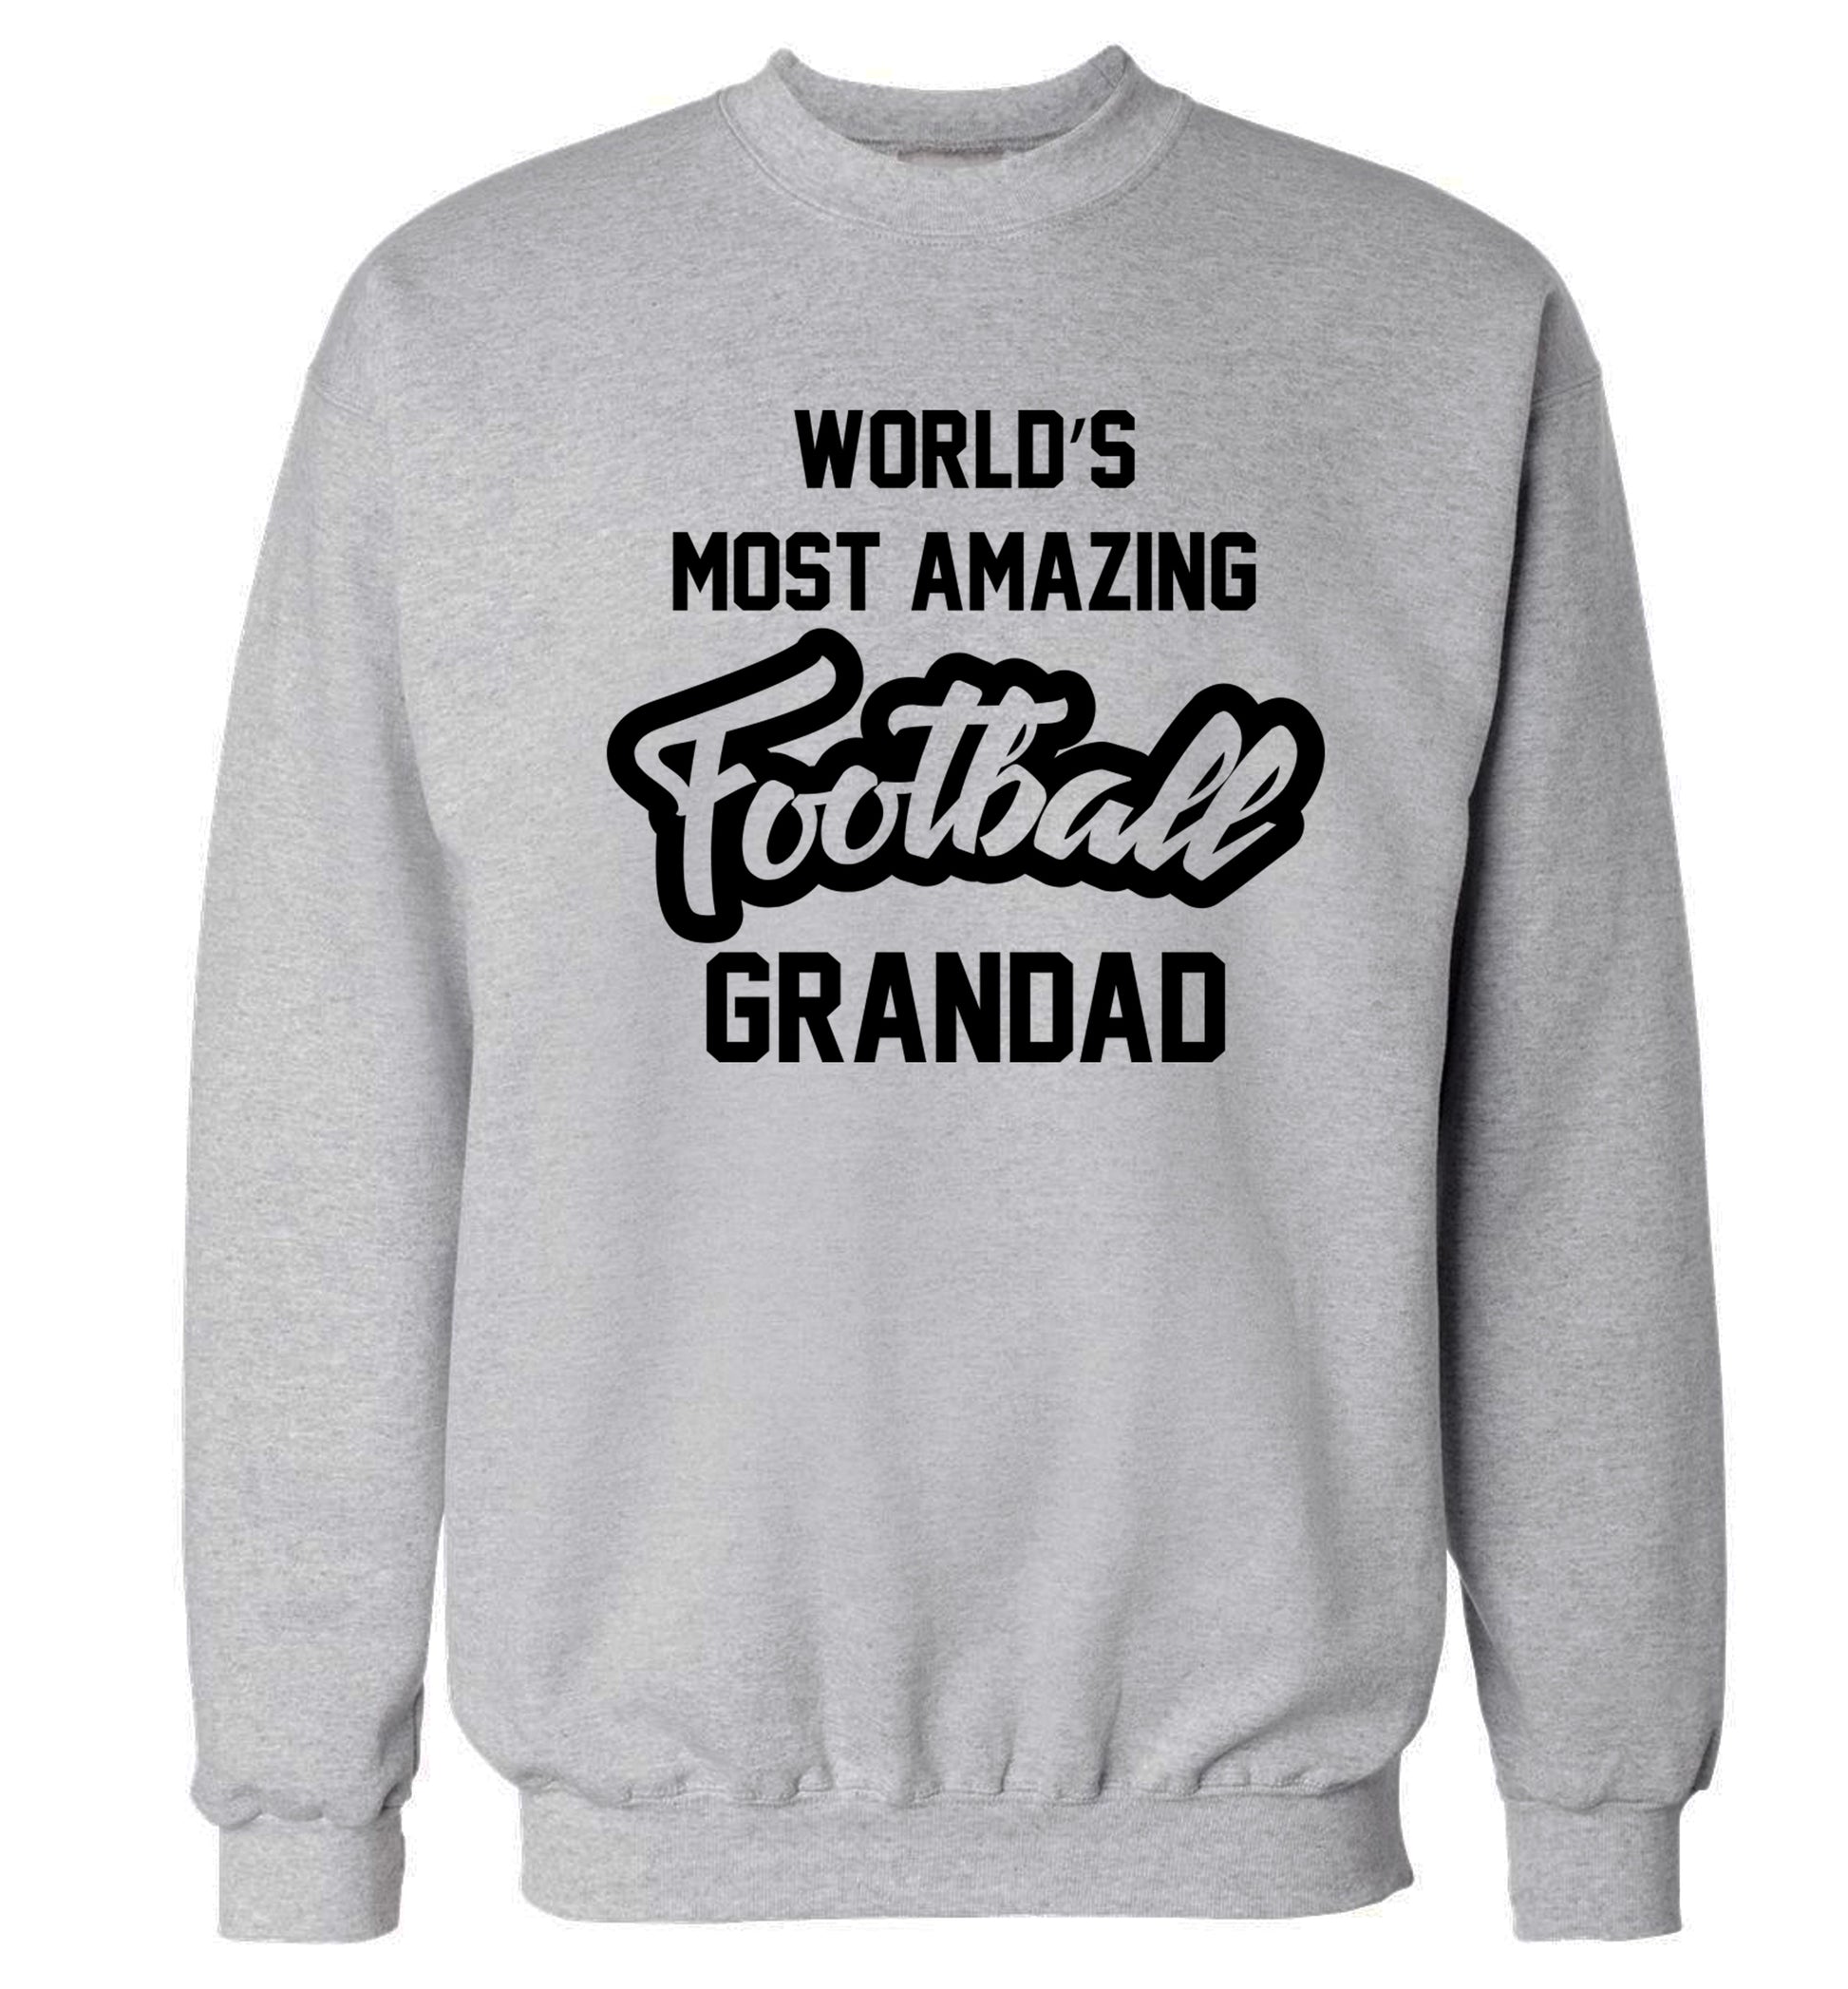 Worlds most amazing football grandad Adult's unisexgrey Sweater 2XL